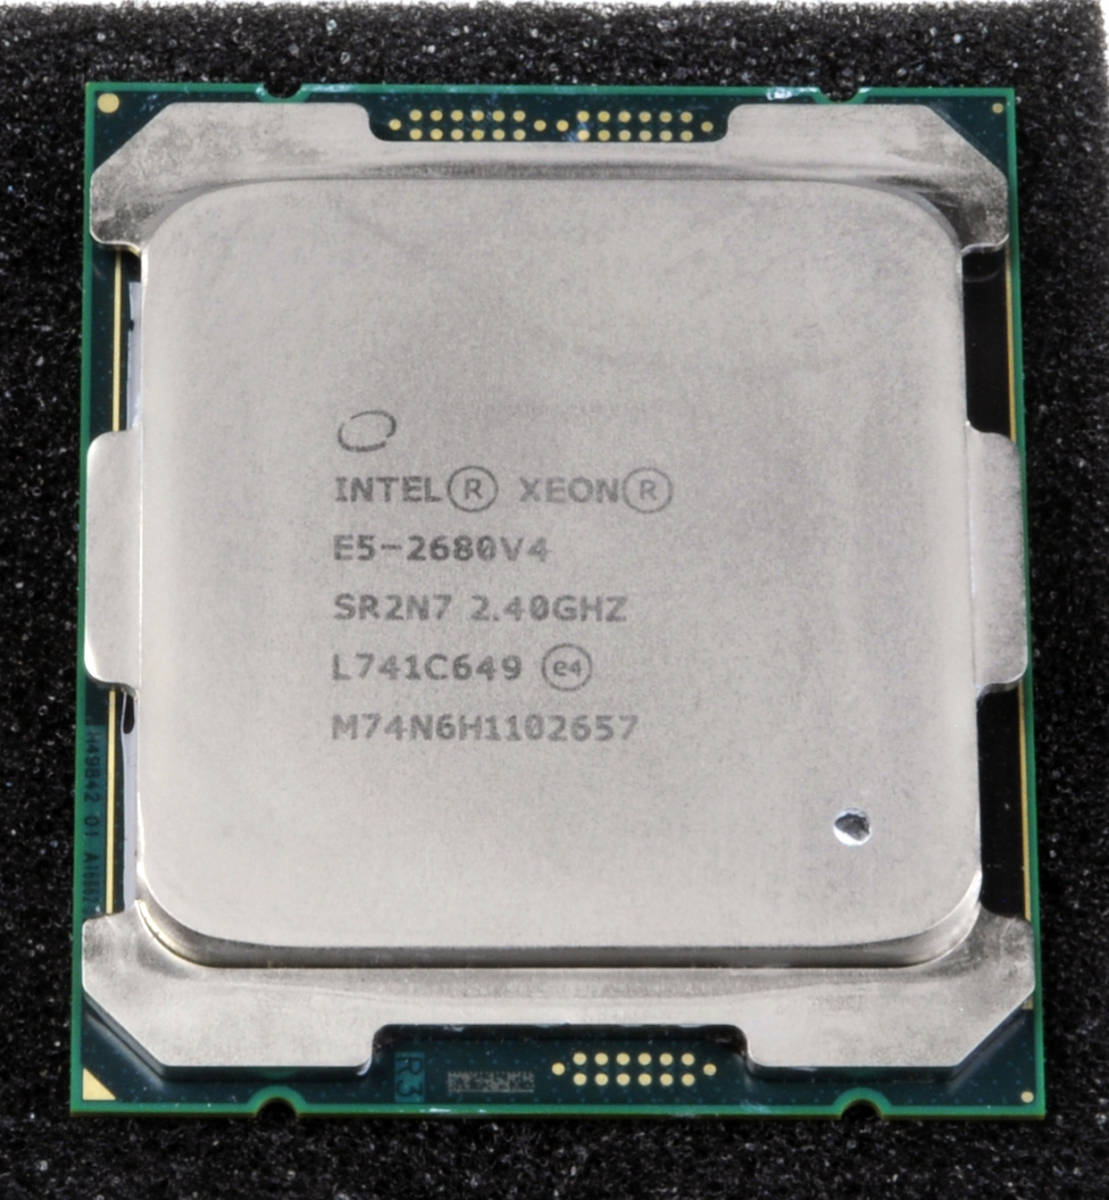 買得 Intel xeon E5-2680v4(14Core28Thread) 作動確認品 安心の国内